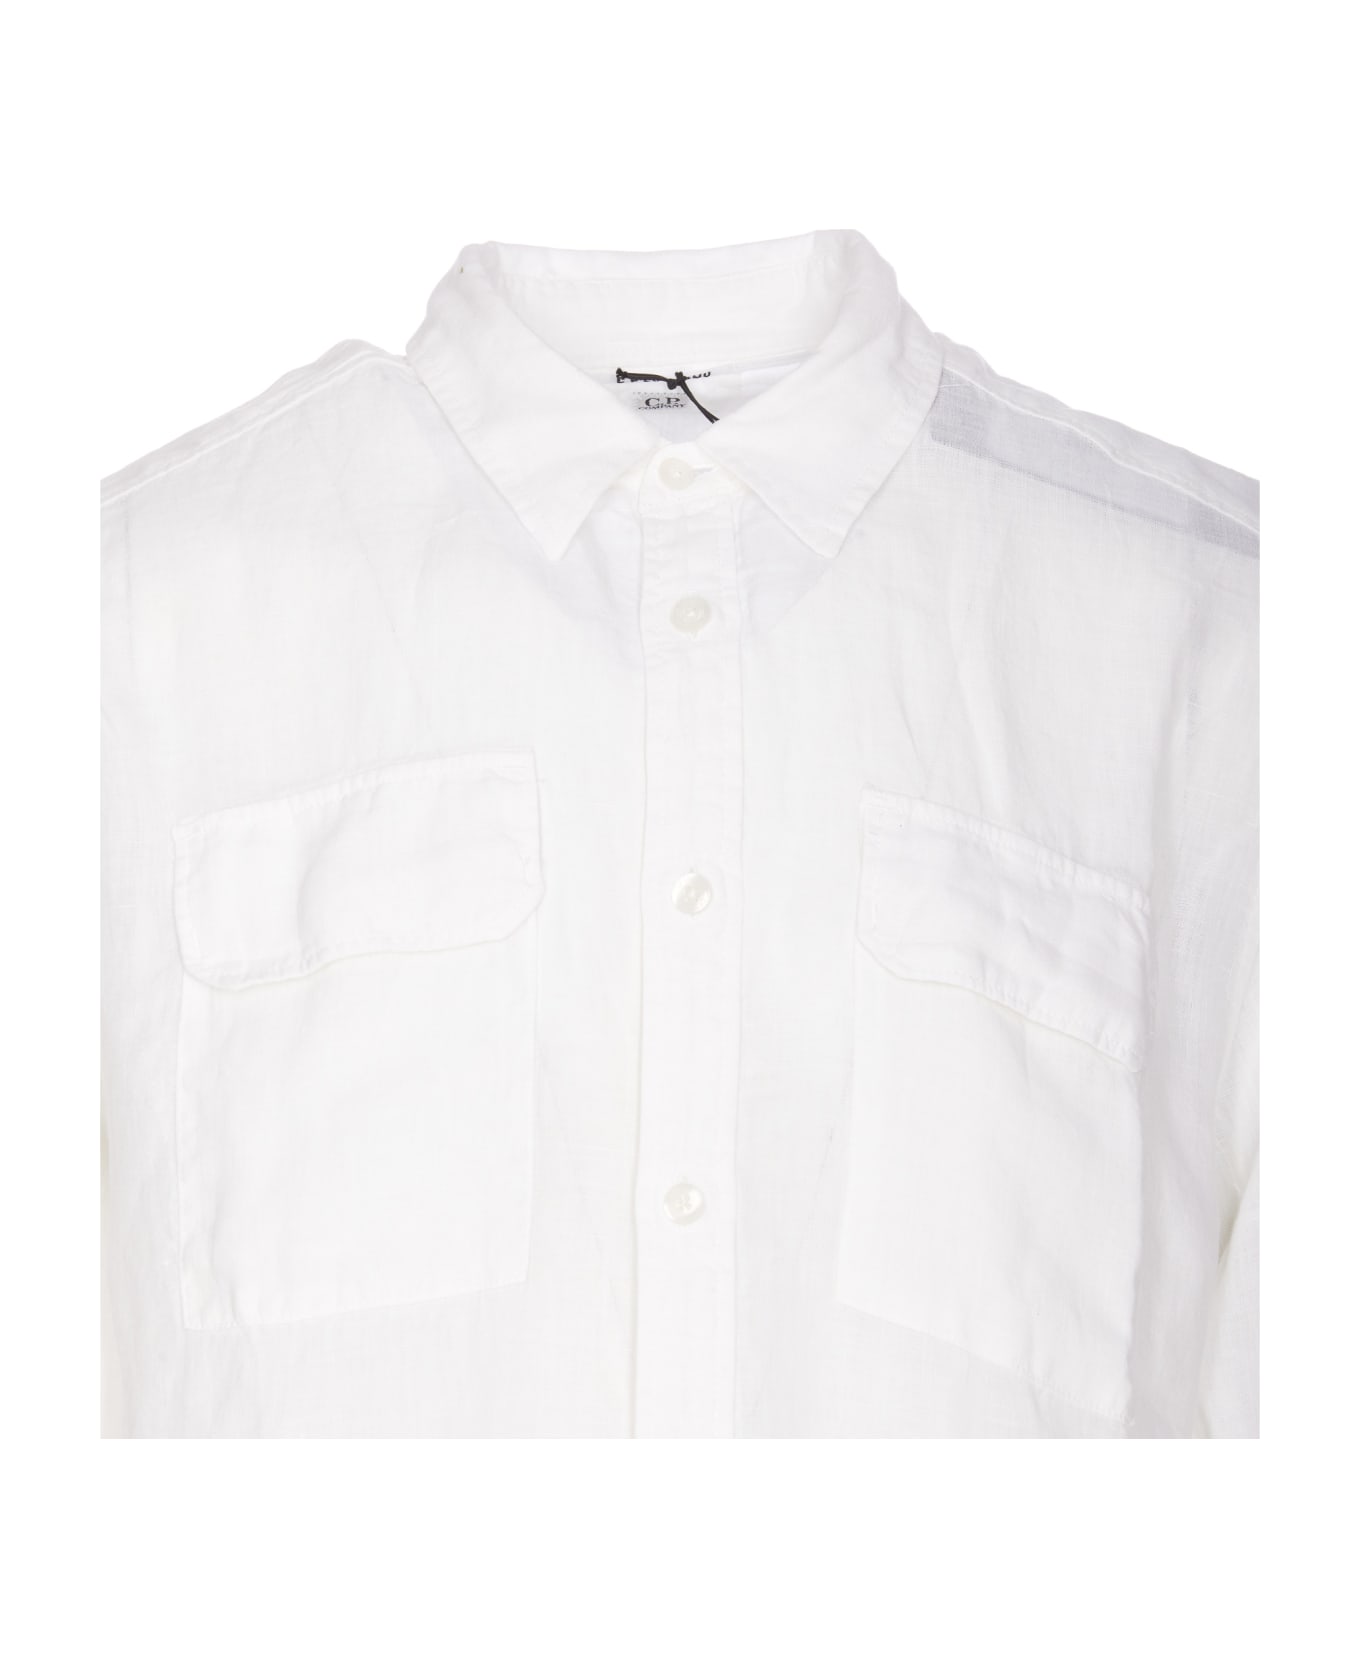 C.P. Company Logo Linen Shirt - White